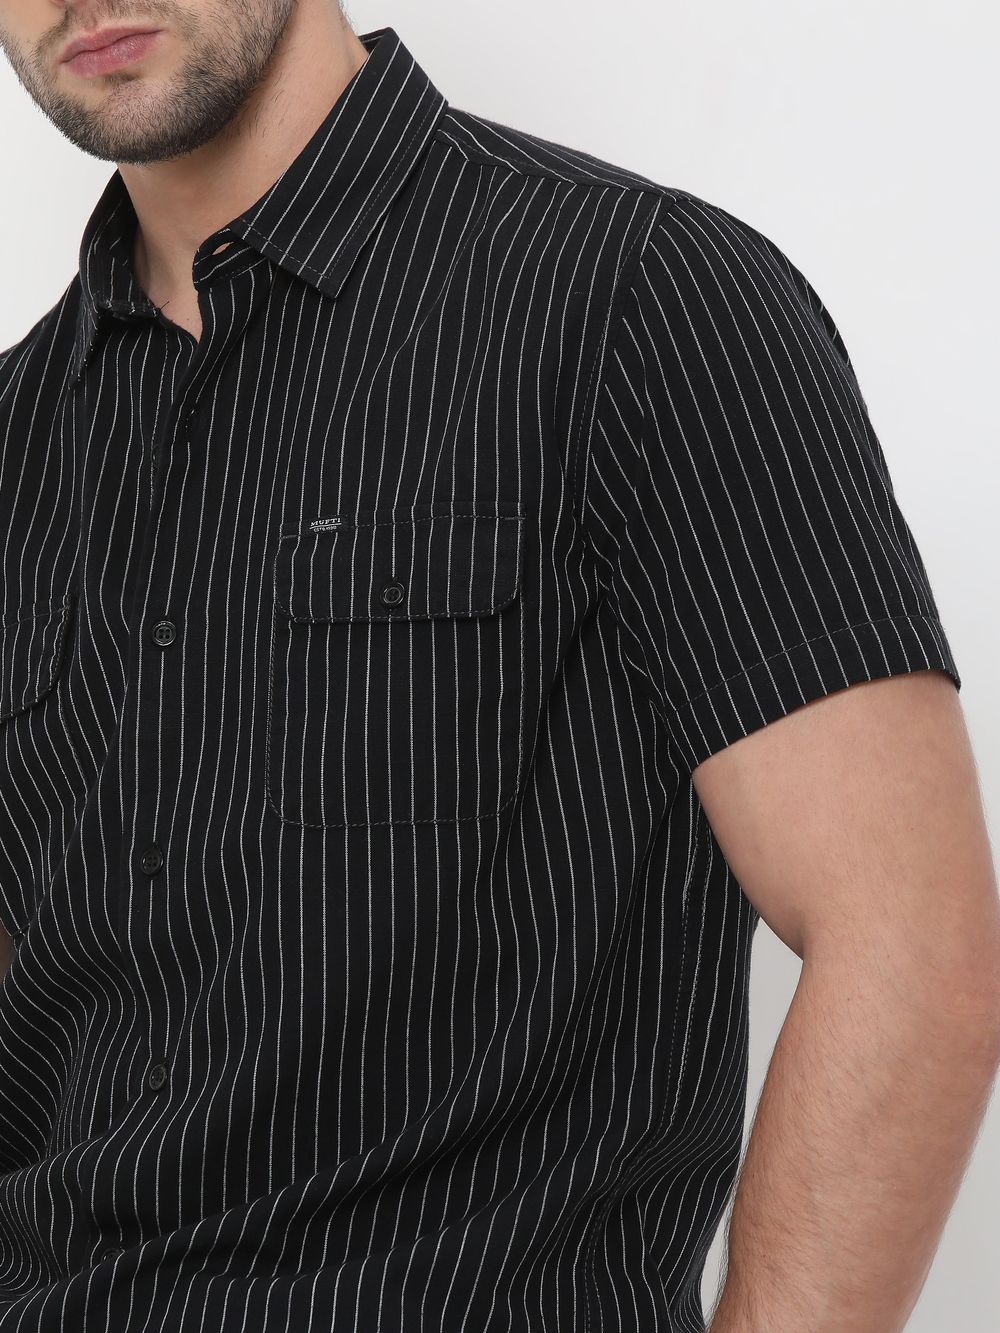 Black & White Pin Stripe Shirt